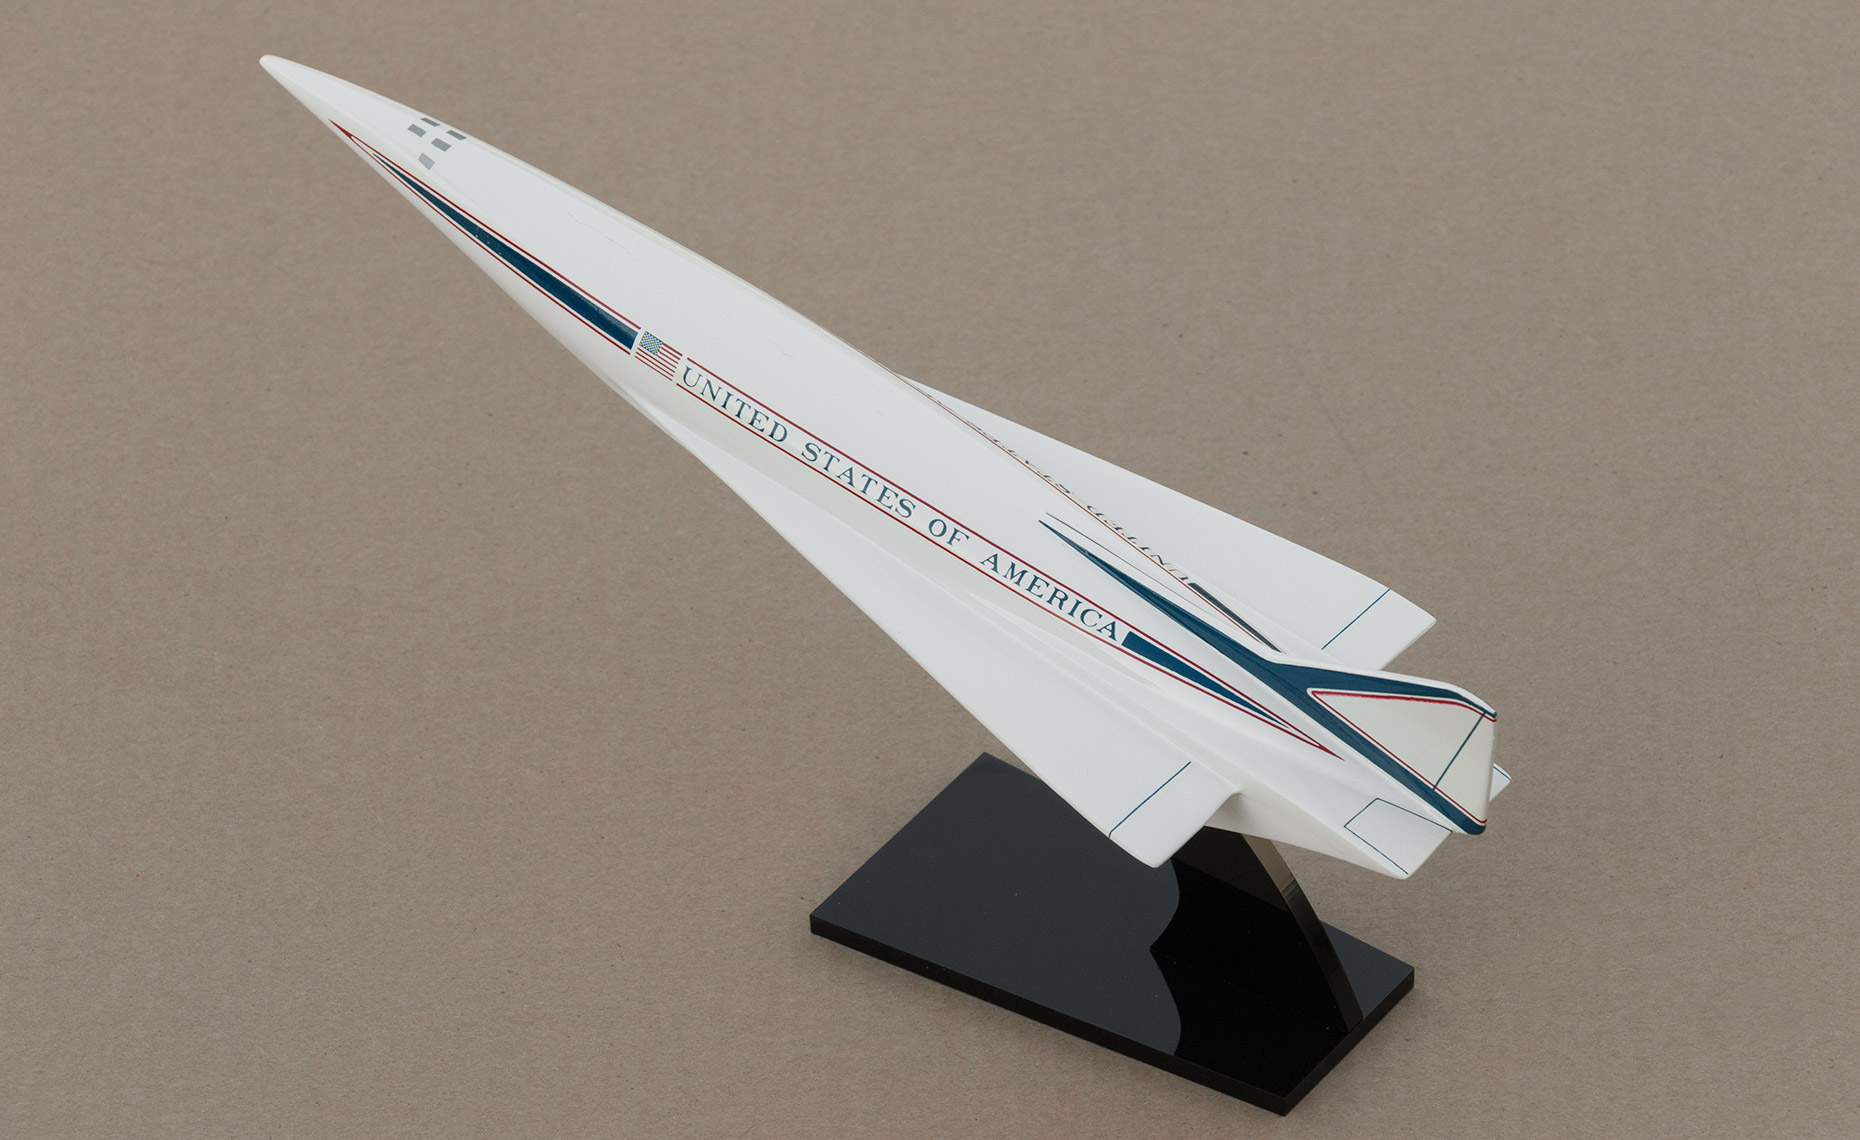 X-30 NASP Concept Model